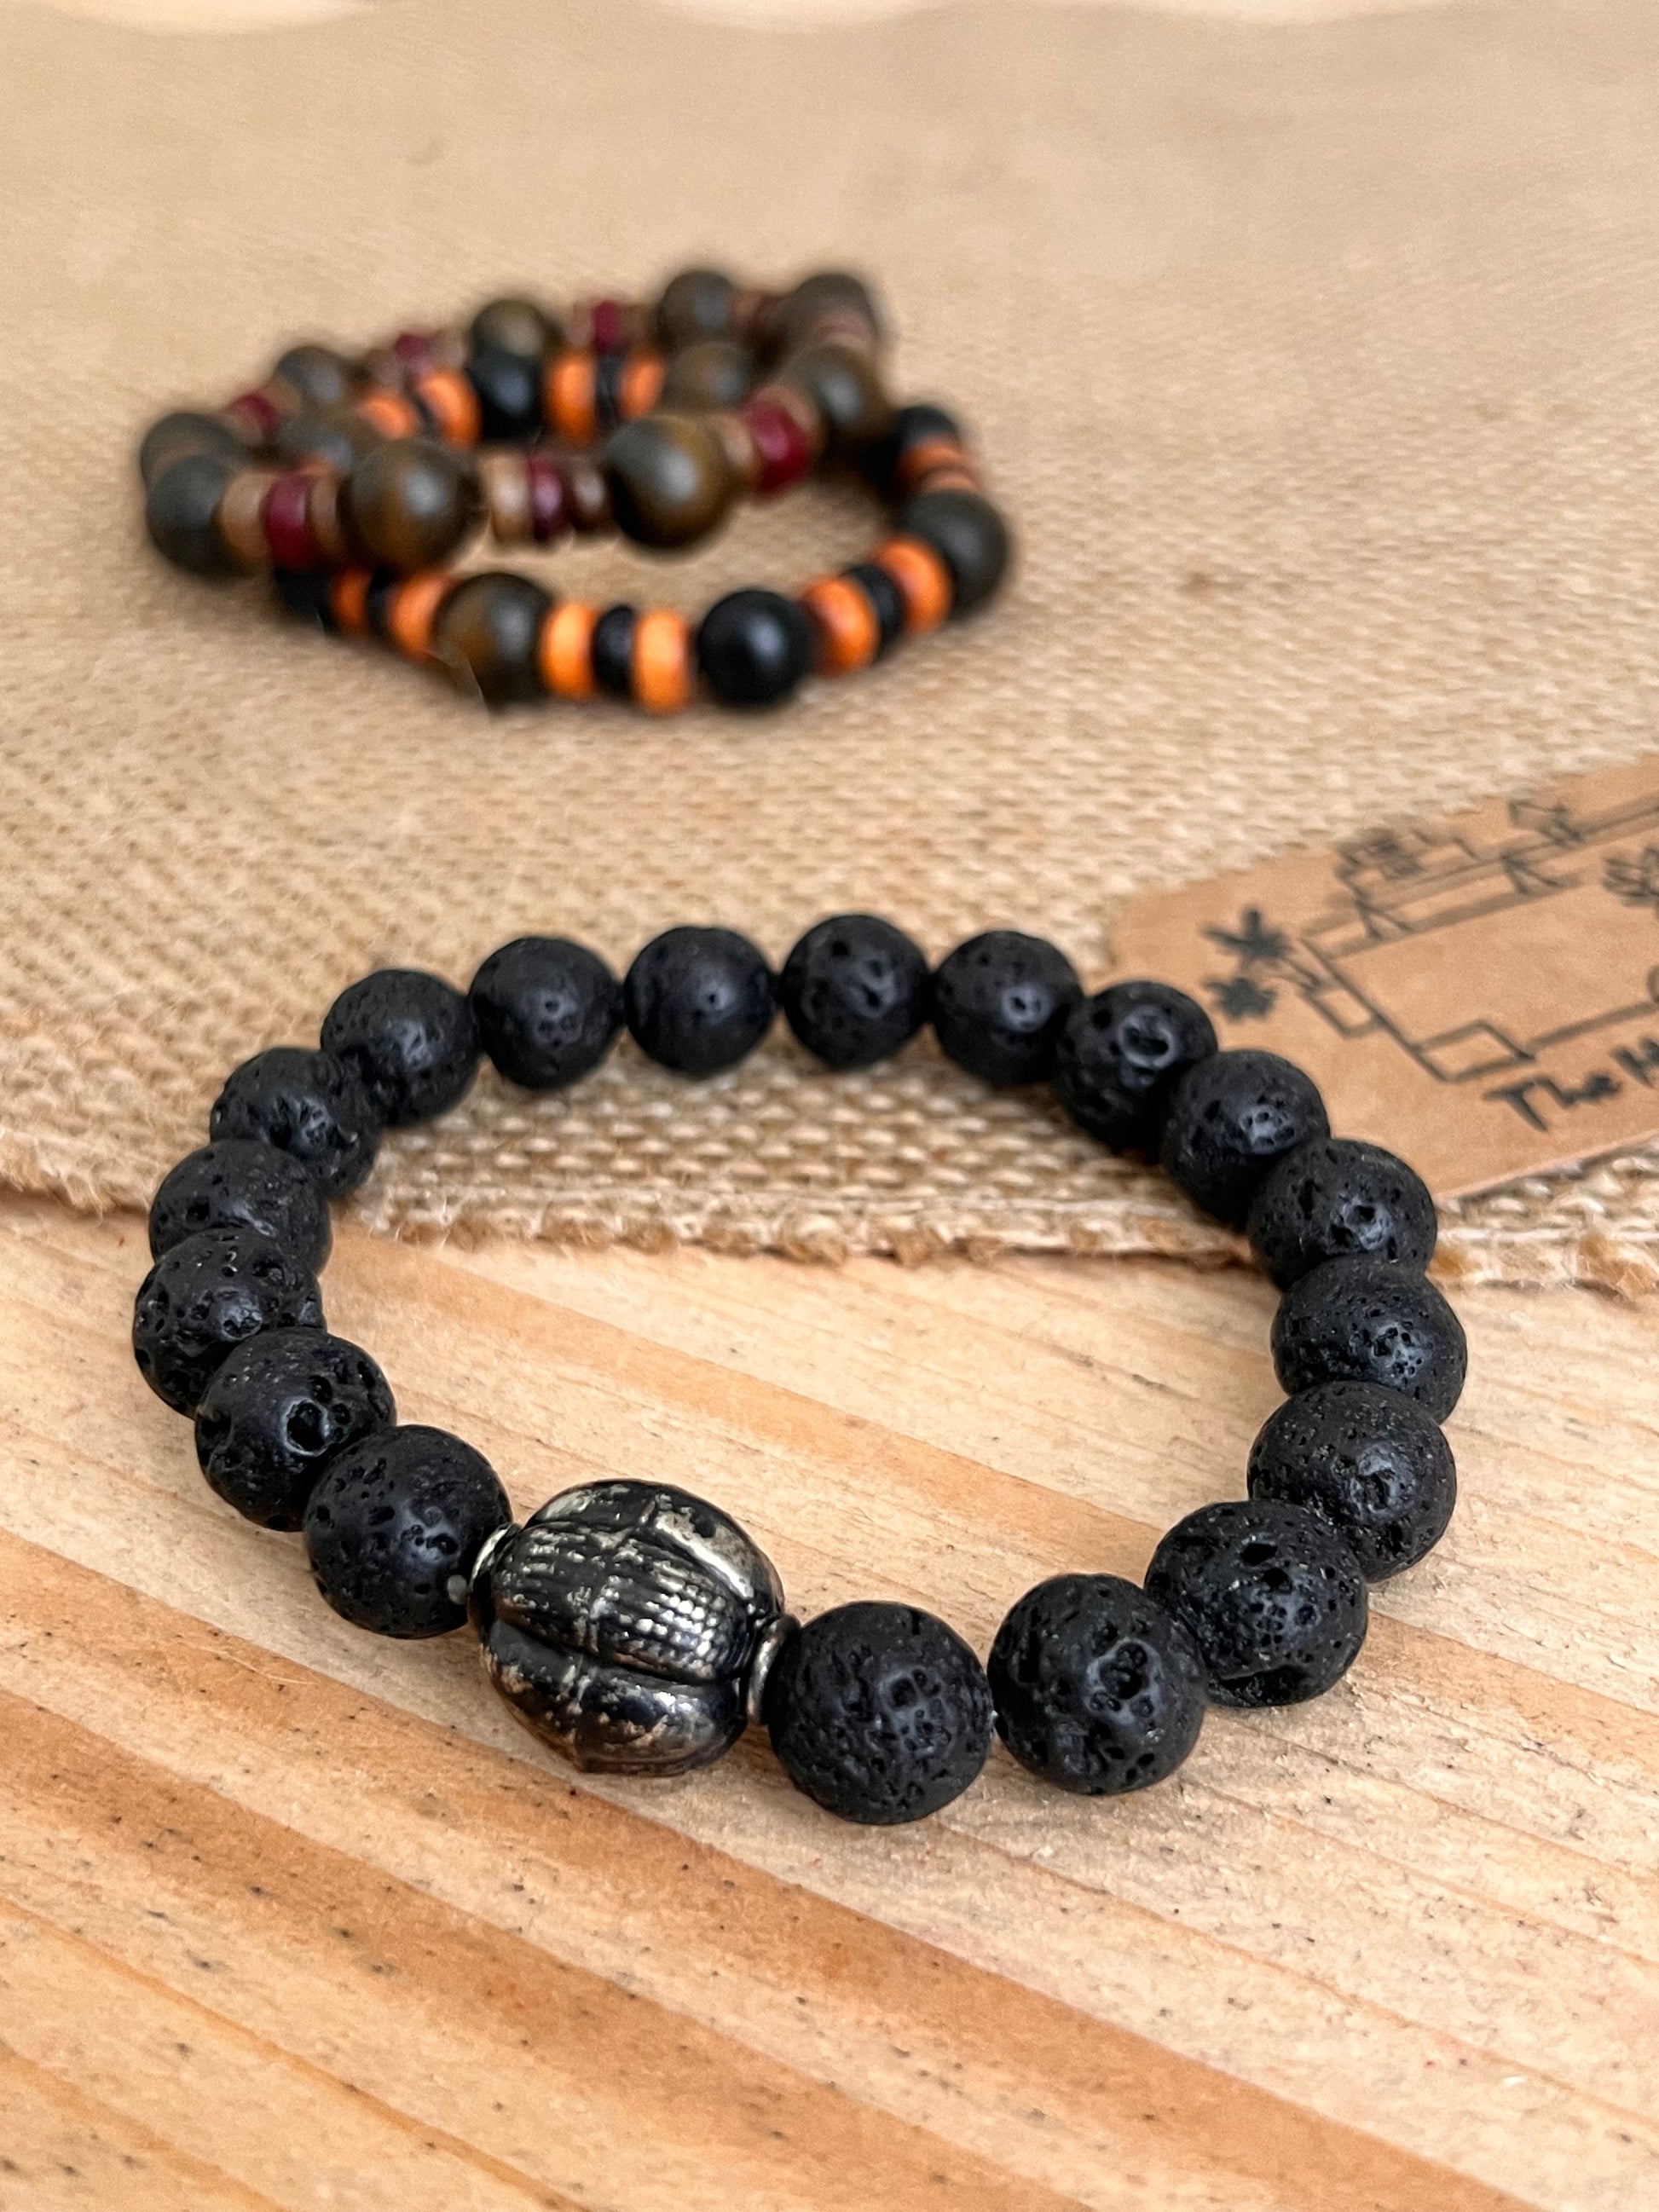 Handmade fair trade black bead bracelet